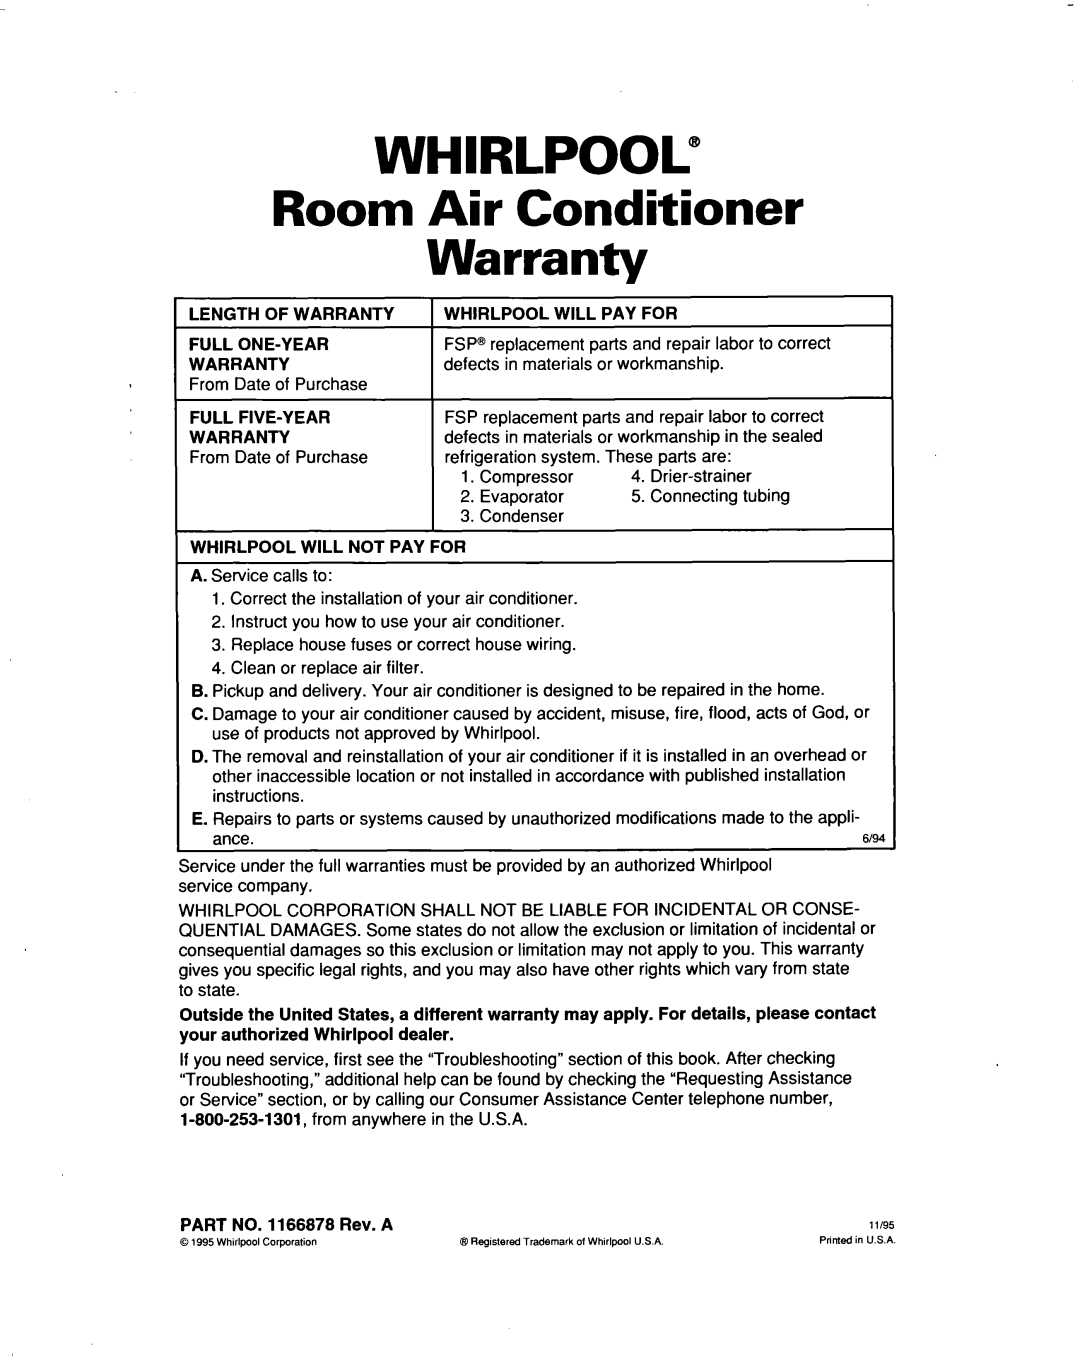 Whirlpool ACQ052 ACQ062 warranty Whirlpool@, Room Air Conditioner Warranty 